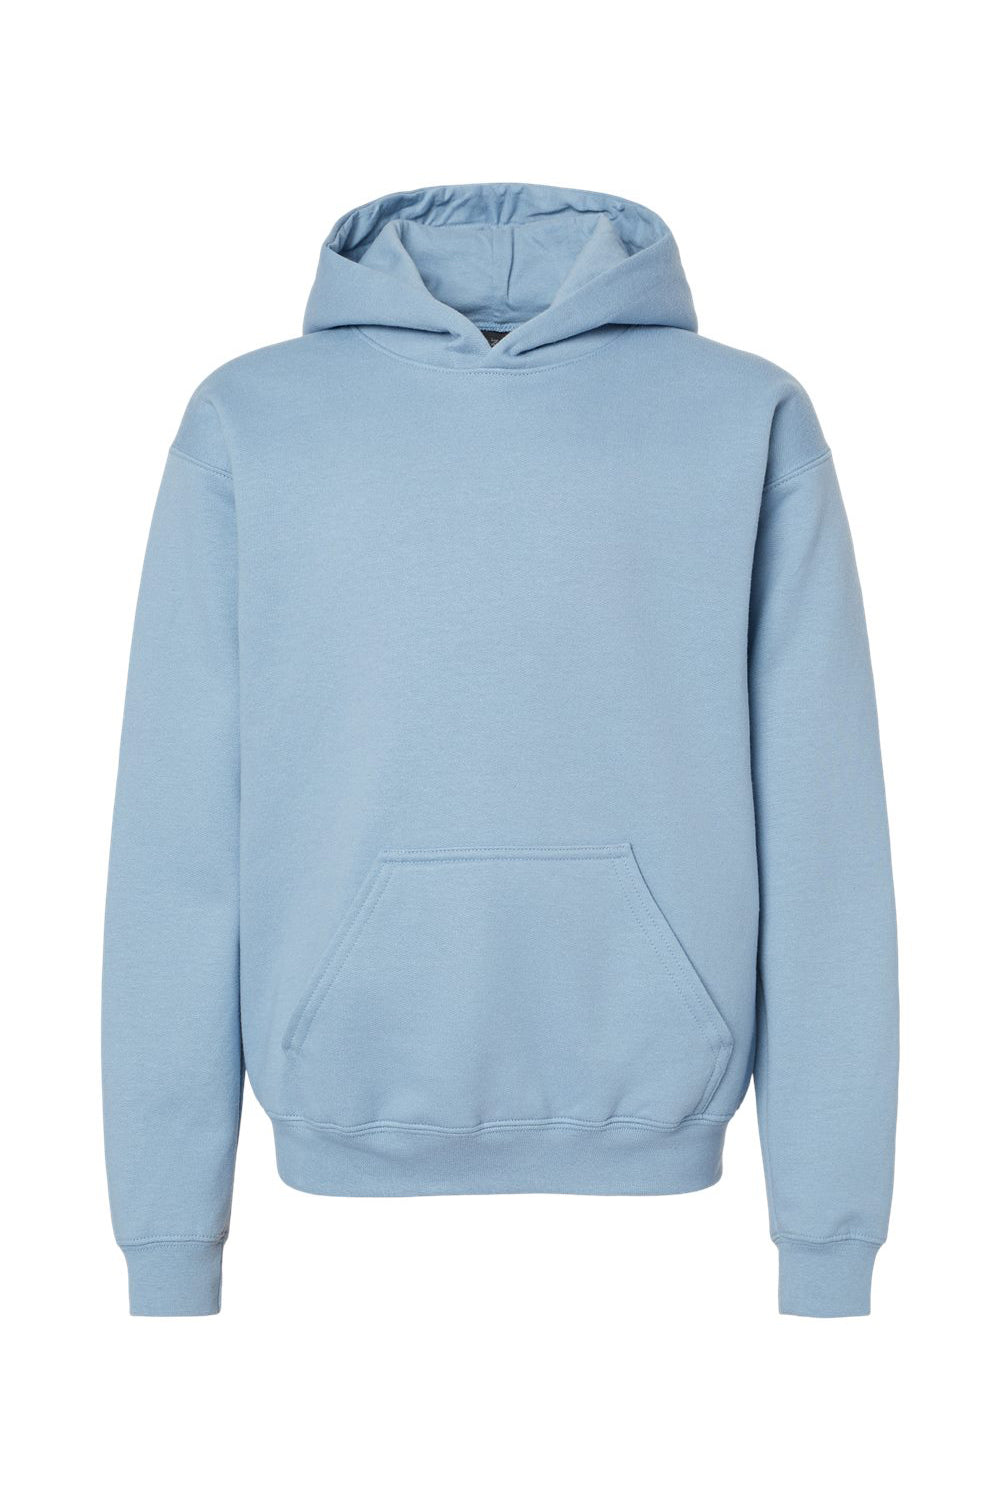 Gildan SF500B Youth Softstyle Hooded Sweatshirt Hoodie Stone Blue Flat Front